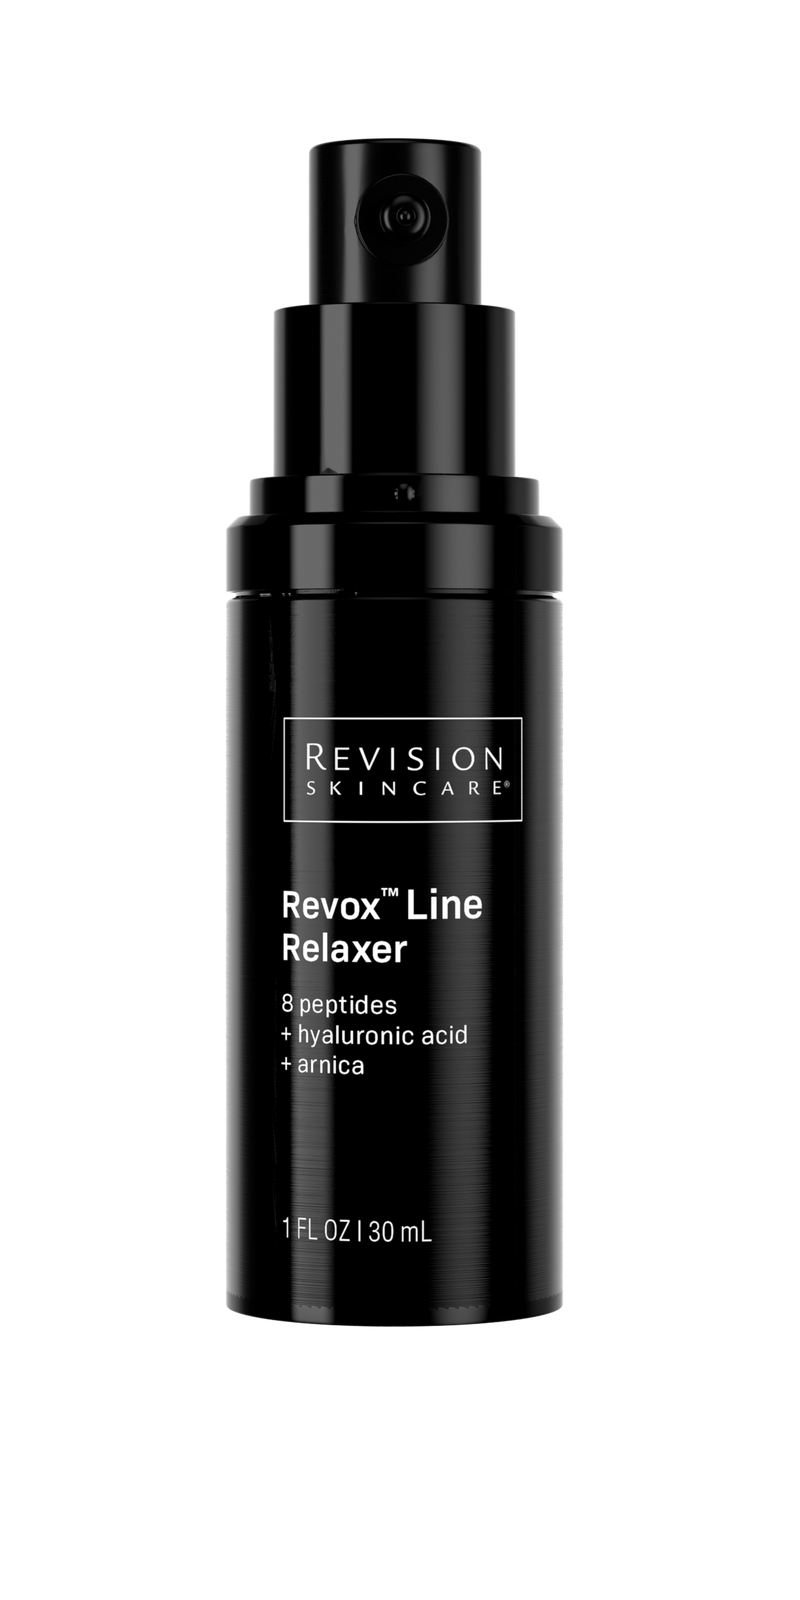 Revision Skincare Revox™ Line Relaxer